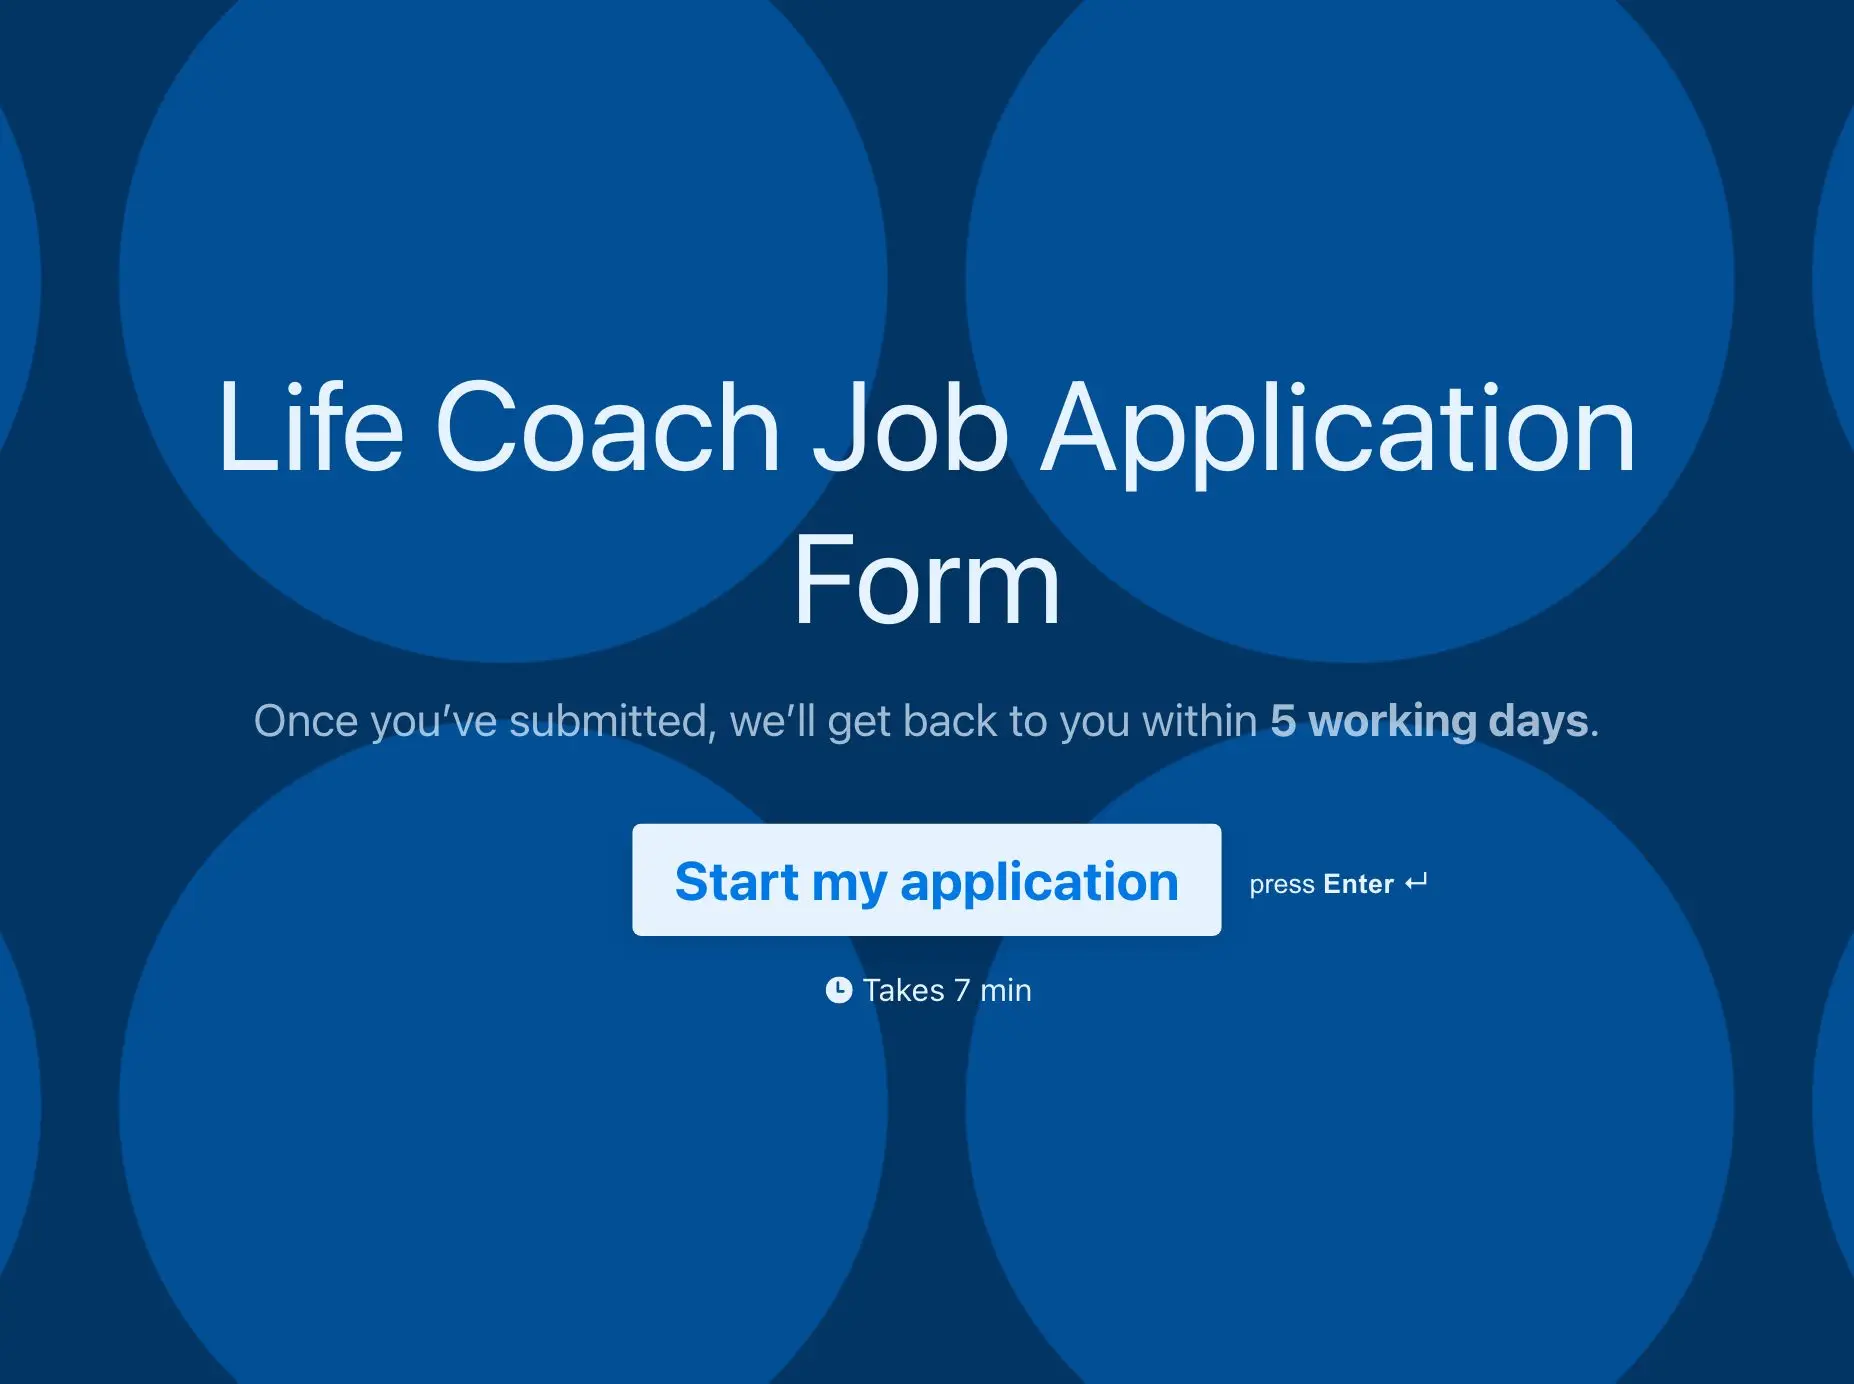 Life Coach Job Application Form Template Hero